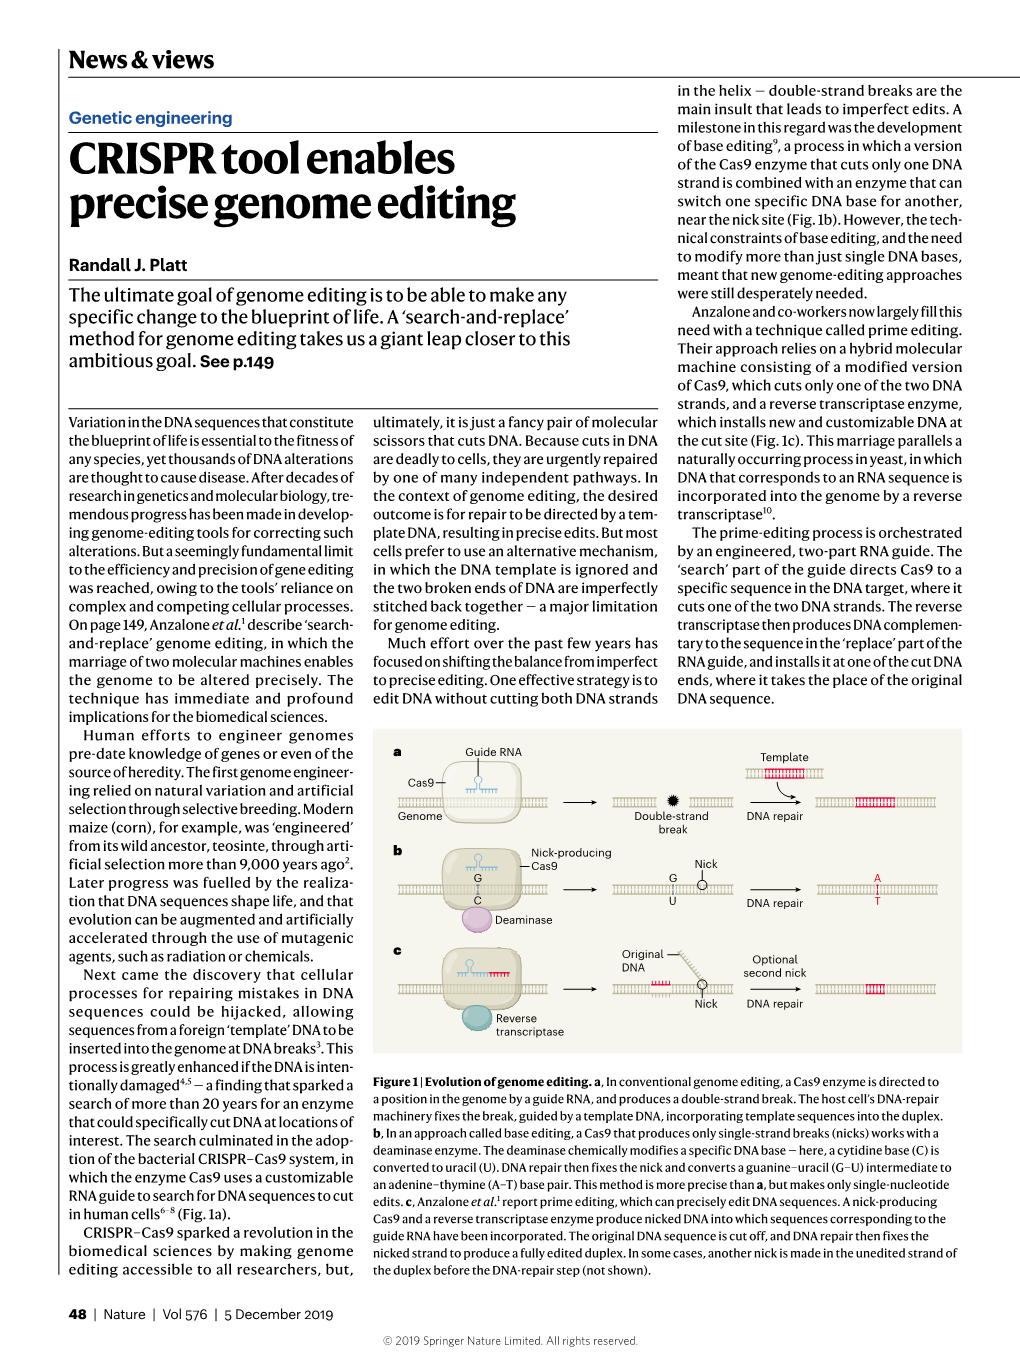 CRISPR Tool Enables Precise Genome Editing